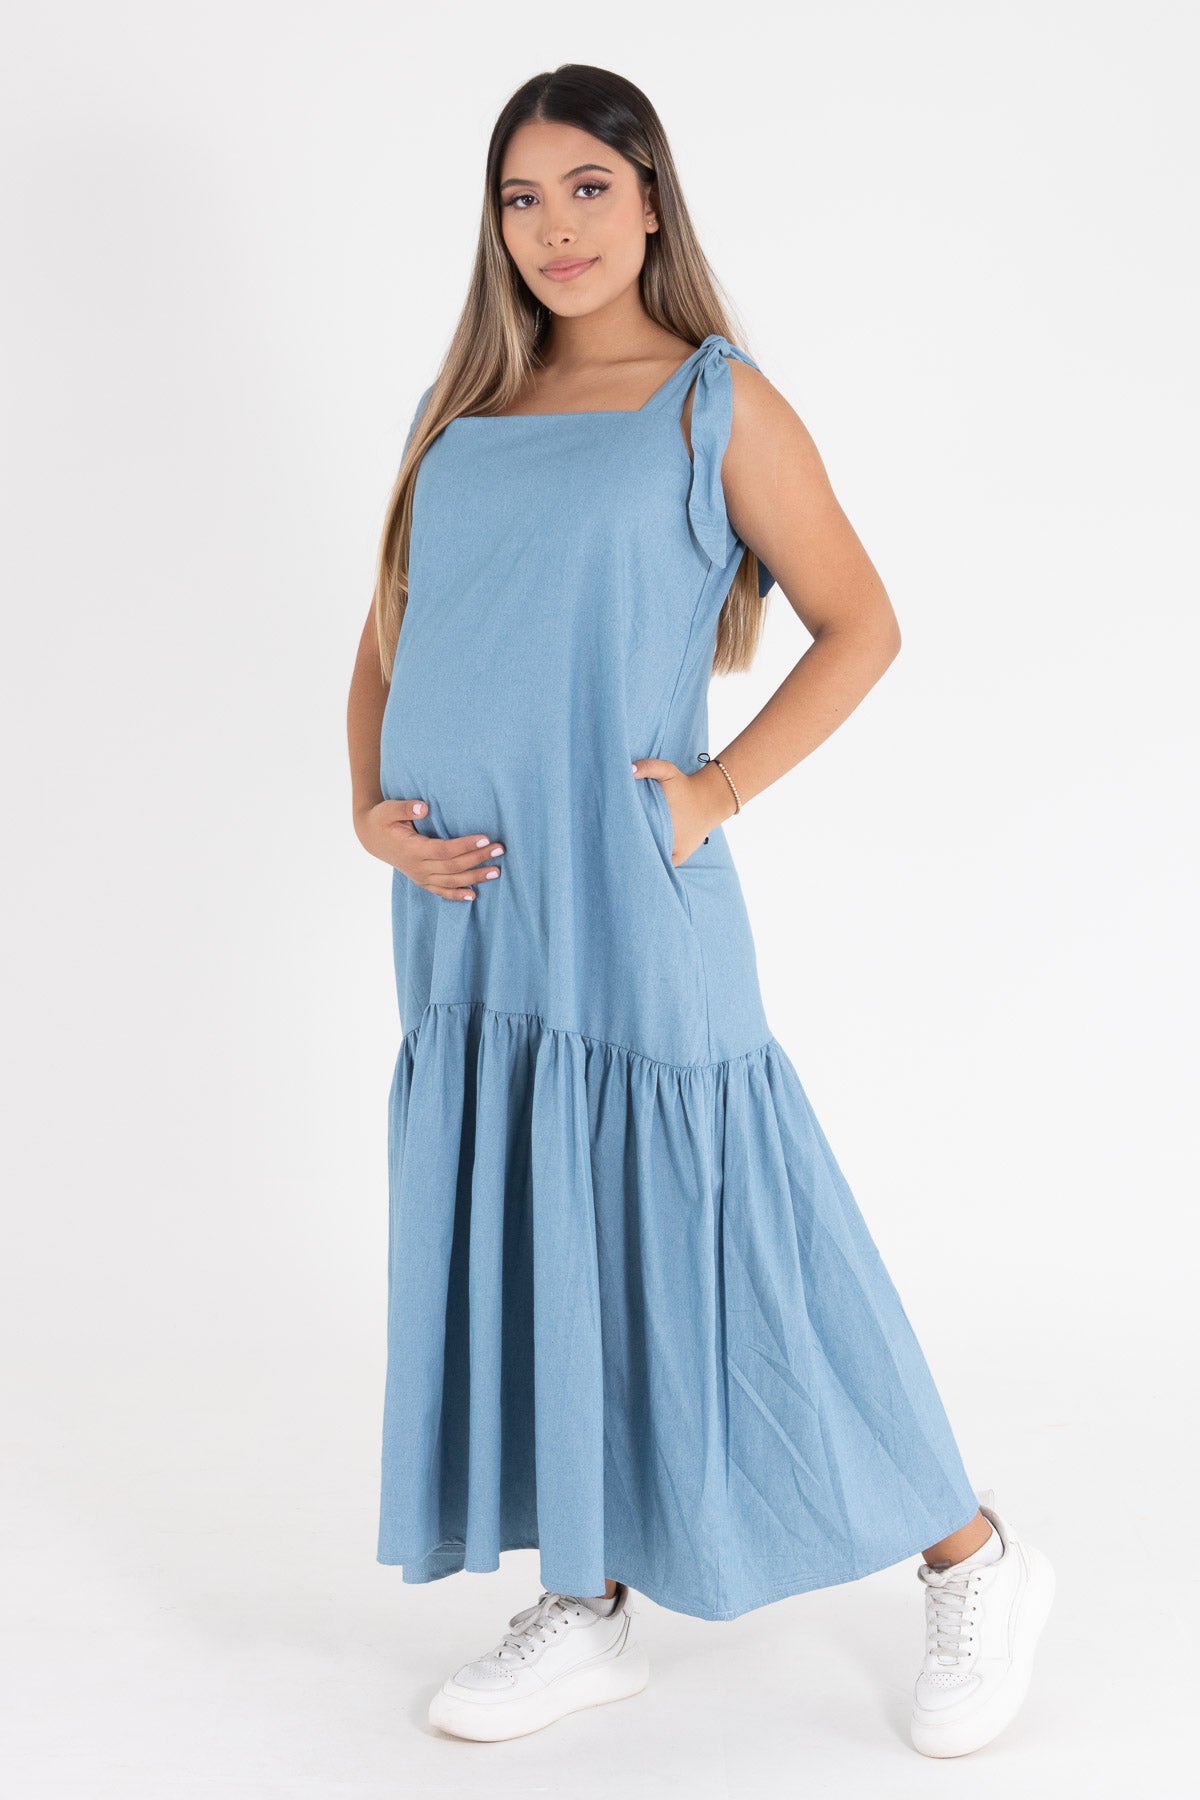 Vestido Ariana azul